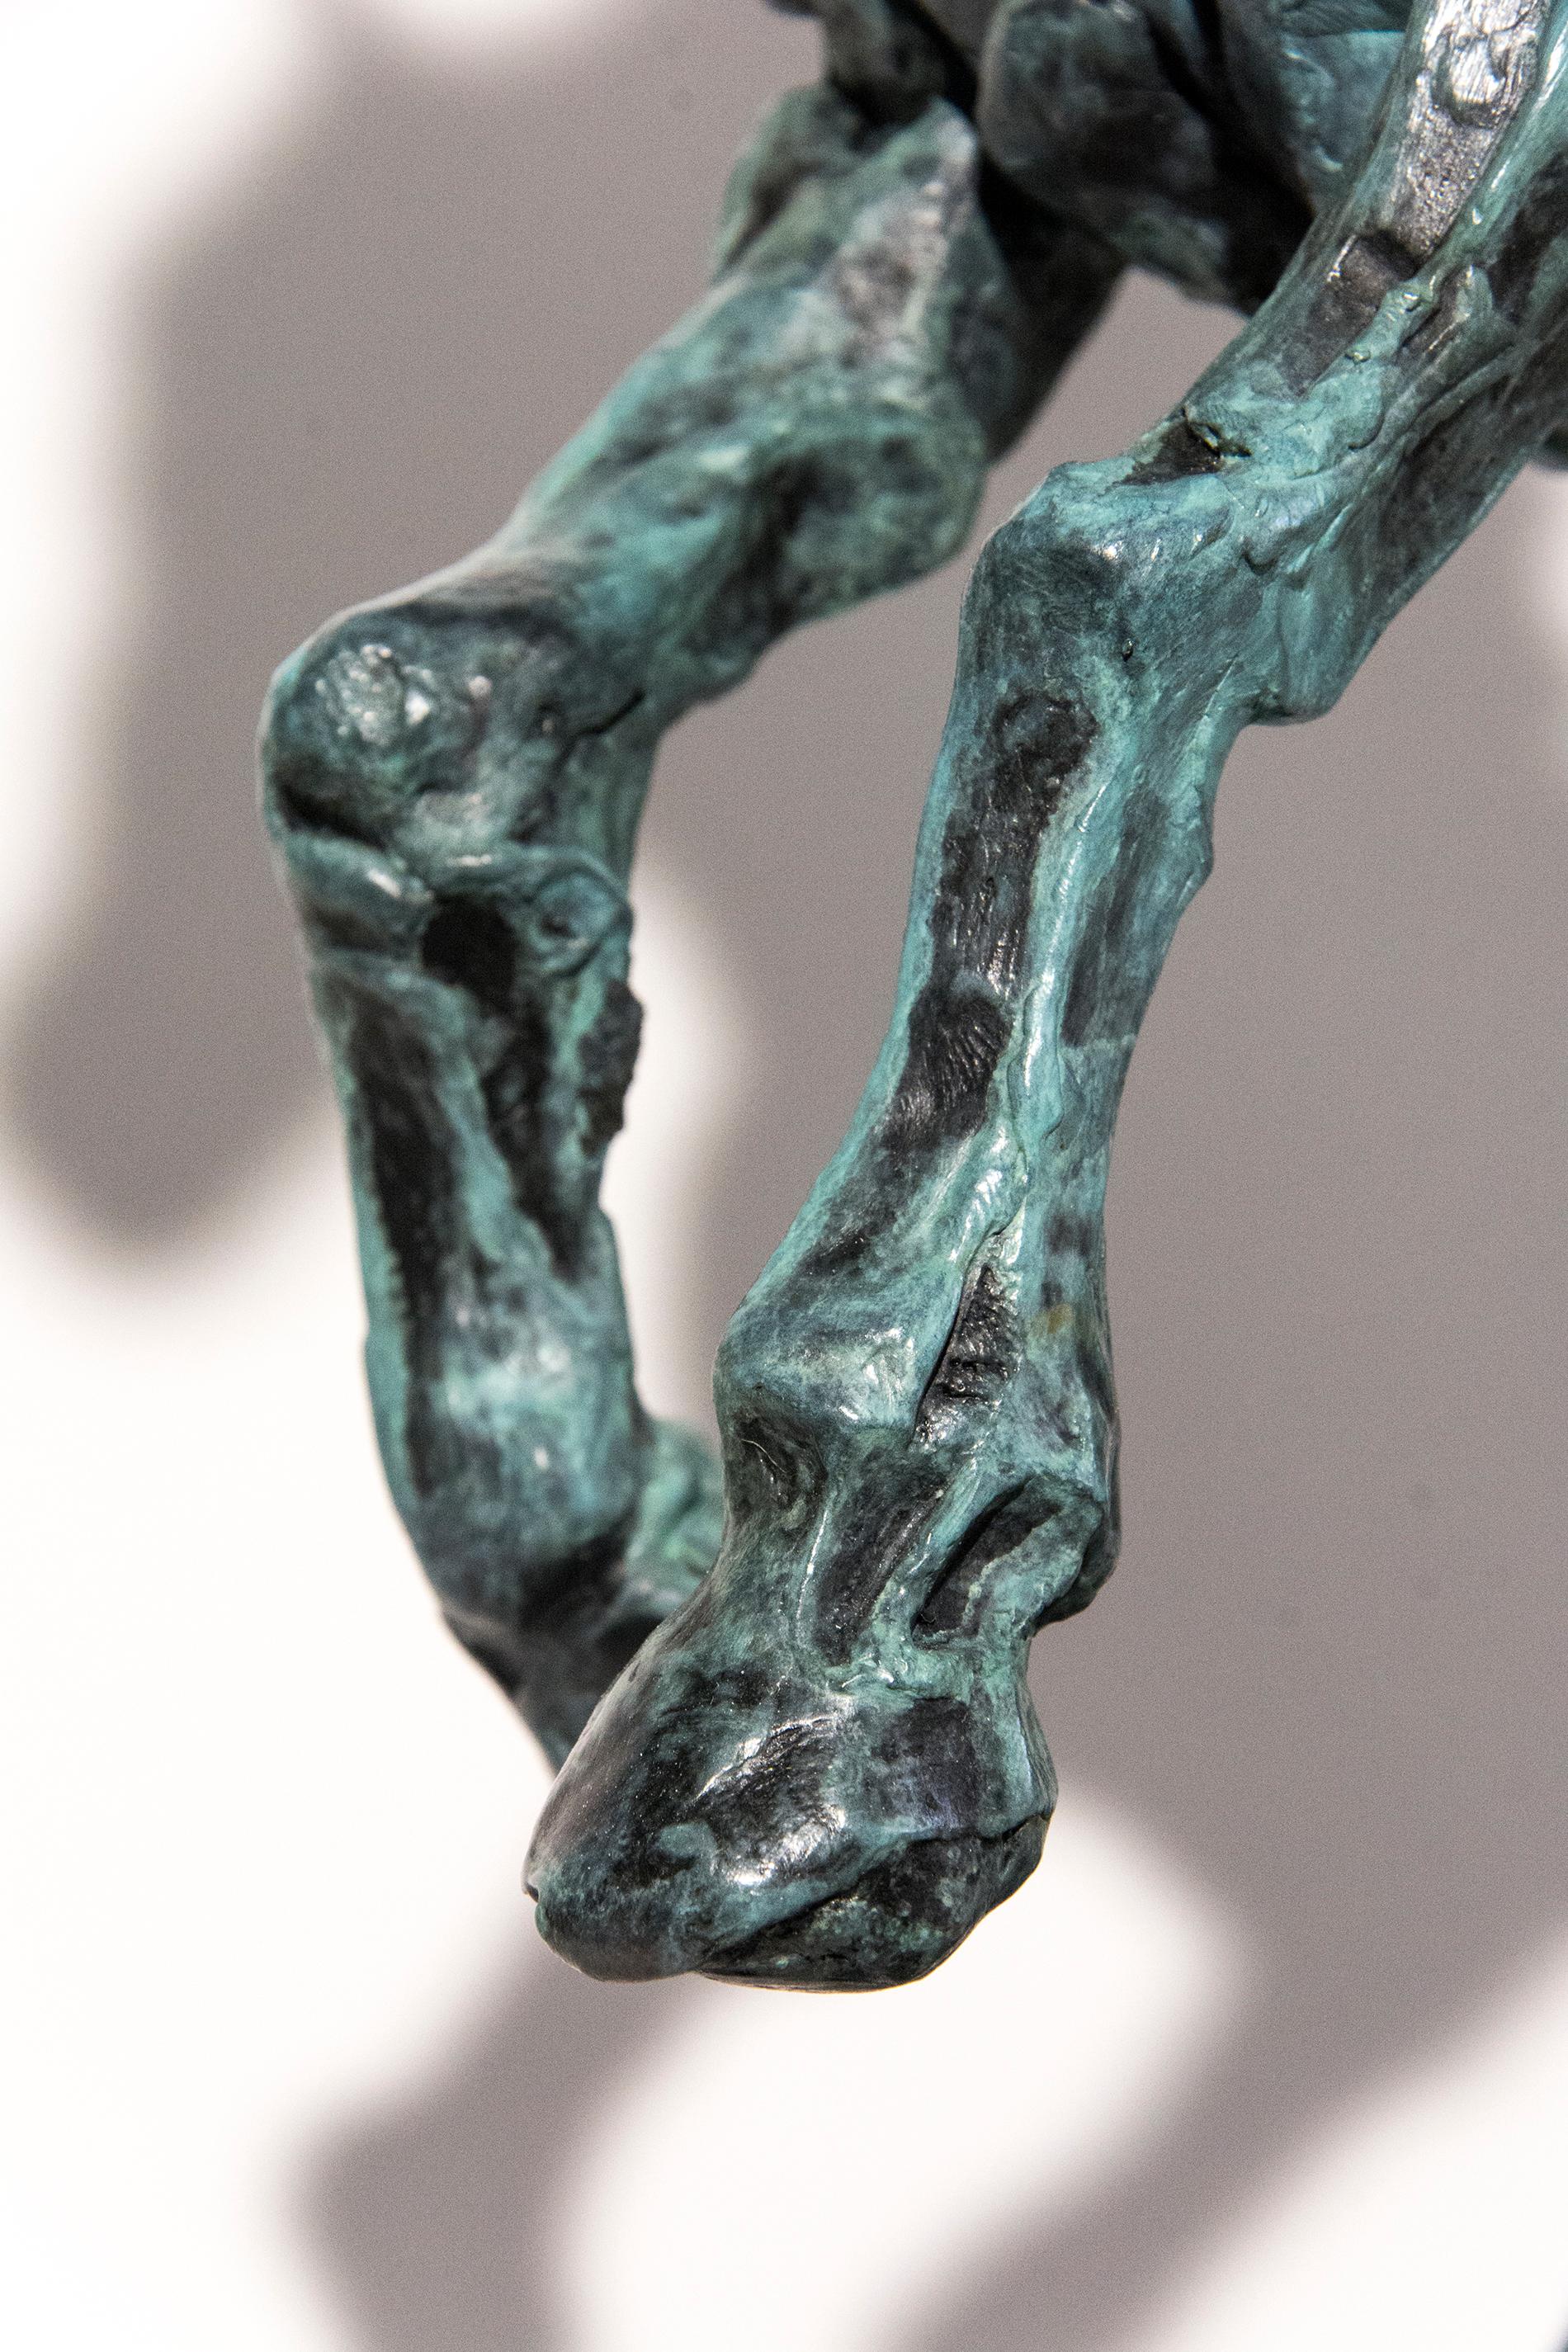 Friesian 3/12 - lively, movement, animal, horse, figurative, bronze statuette - Gold Figurative Sculpture by Richard Tosczak